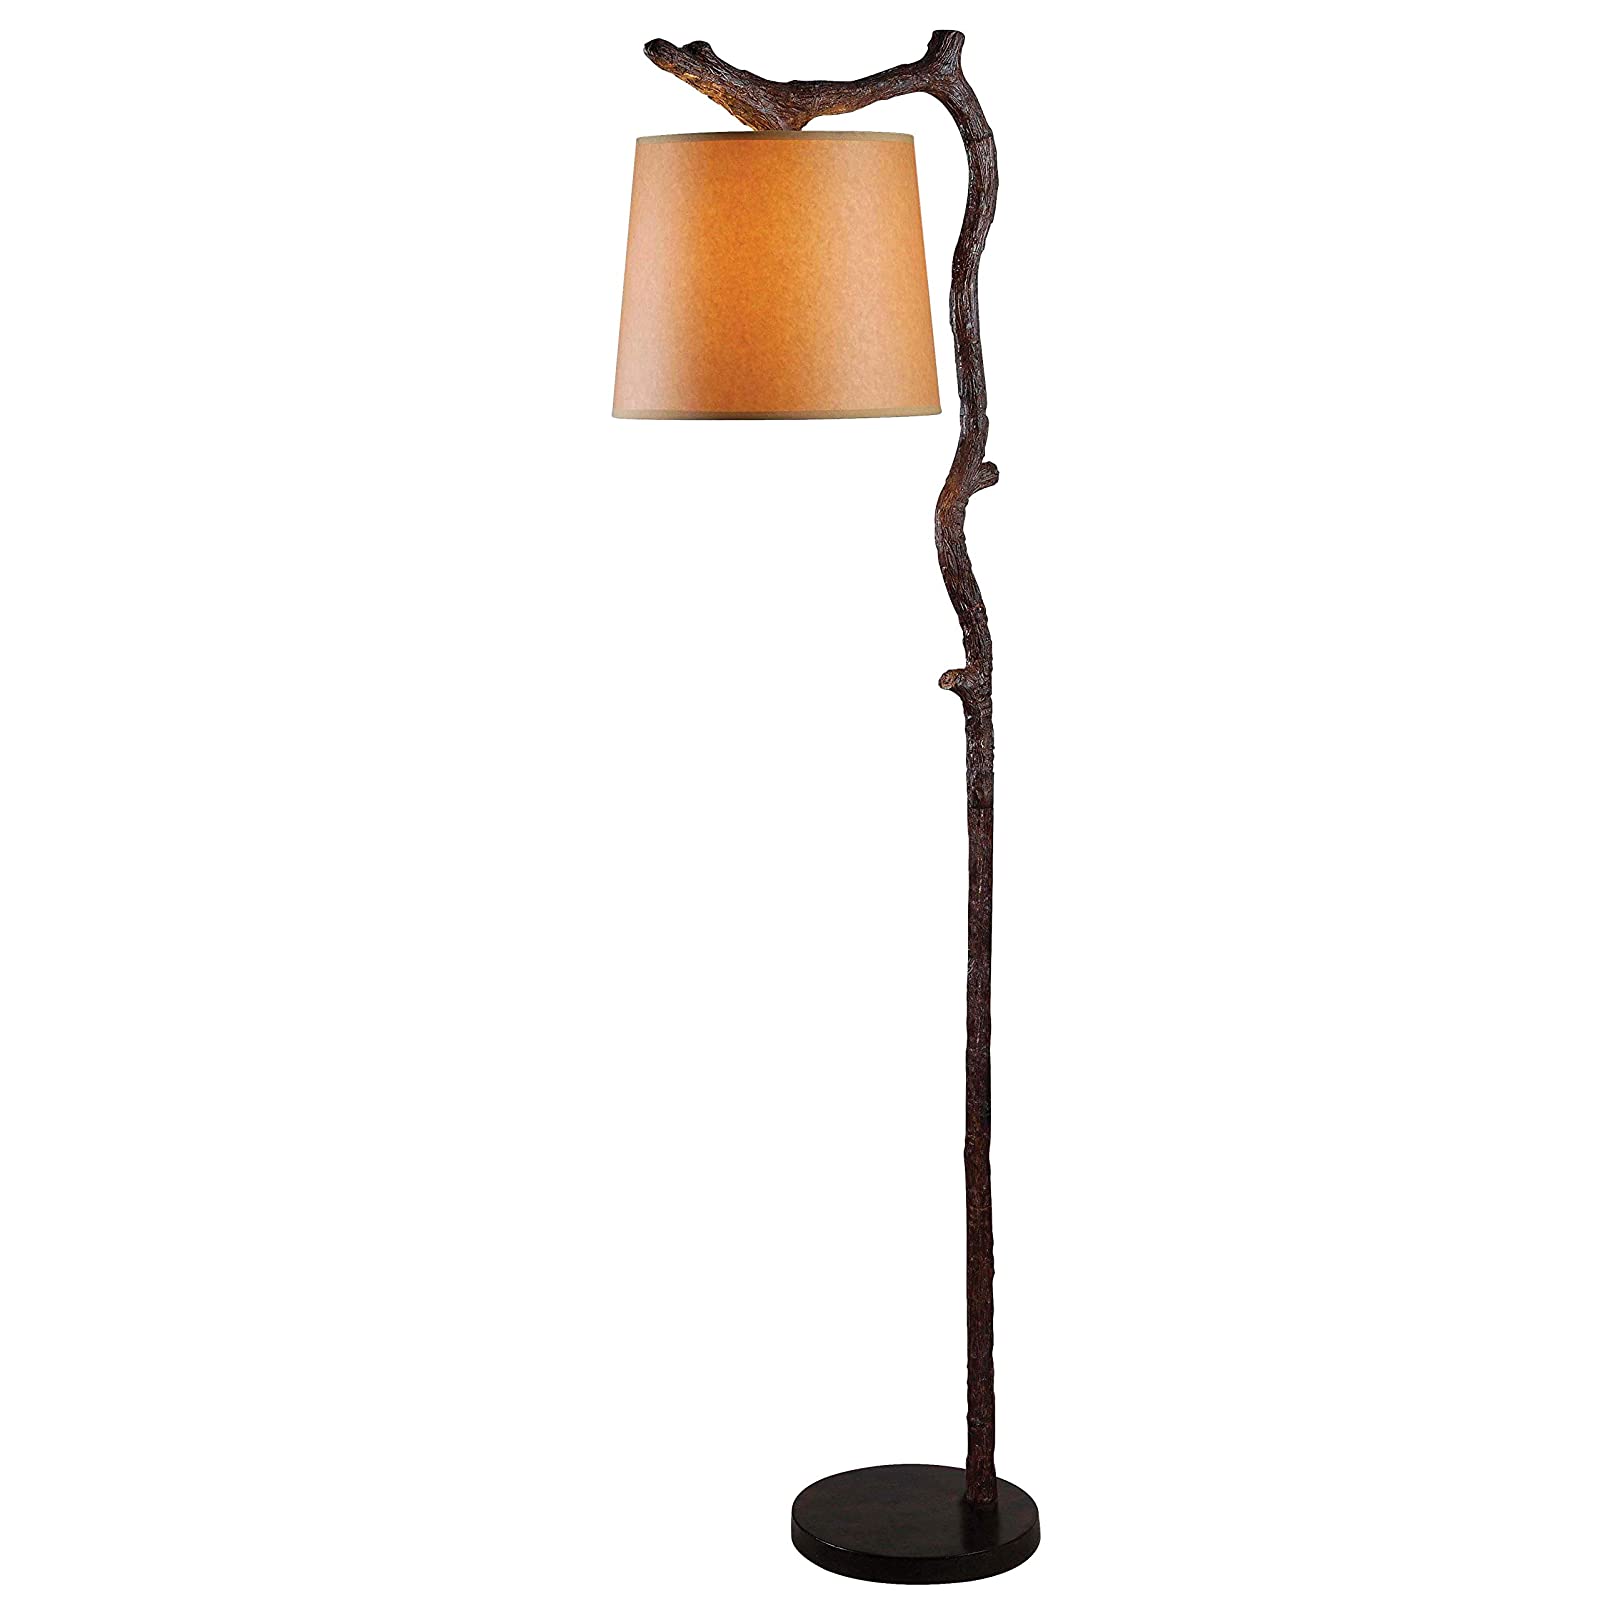 Kenroy-Home-32452BRZD-Rustic-Floor-Lamp 15 Unique Artistic Floor Lamps to Light Your Bedroom